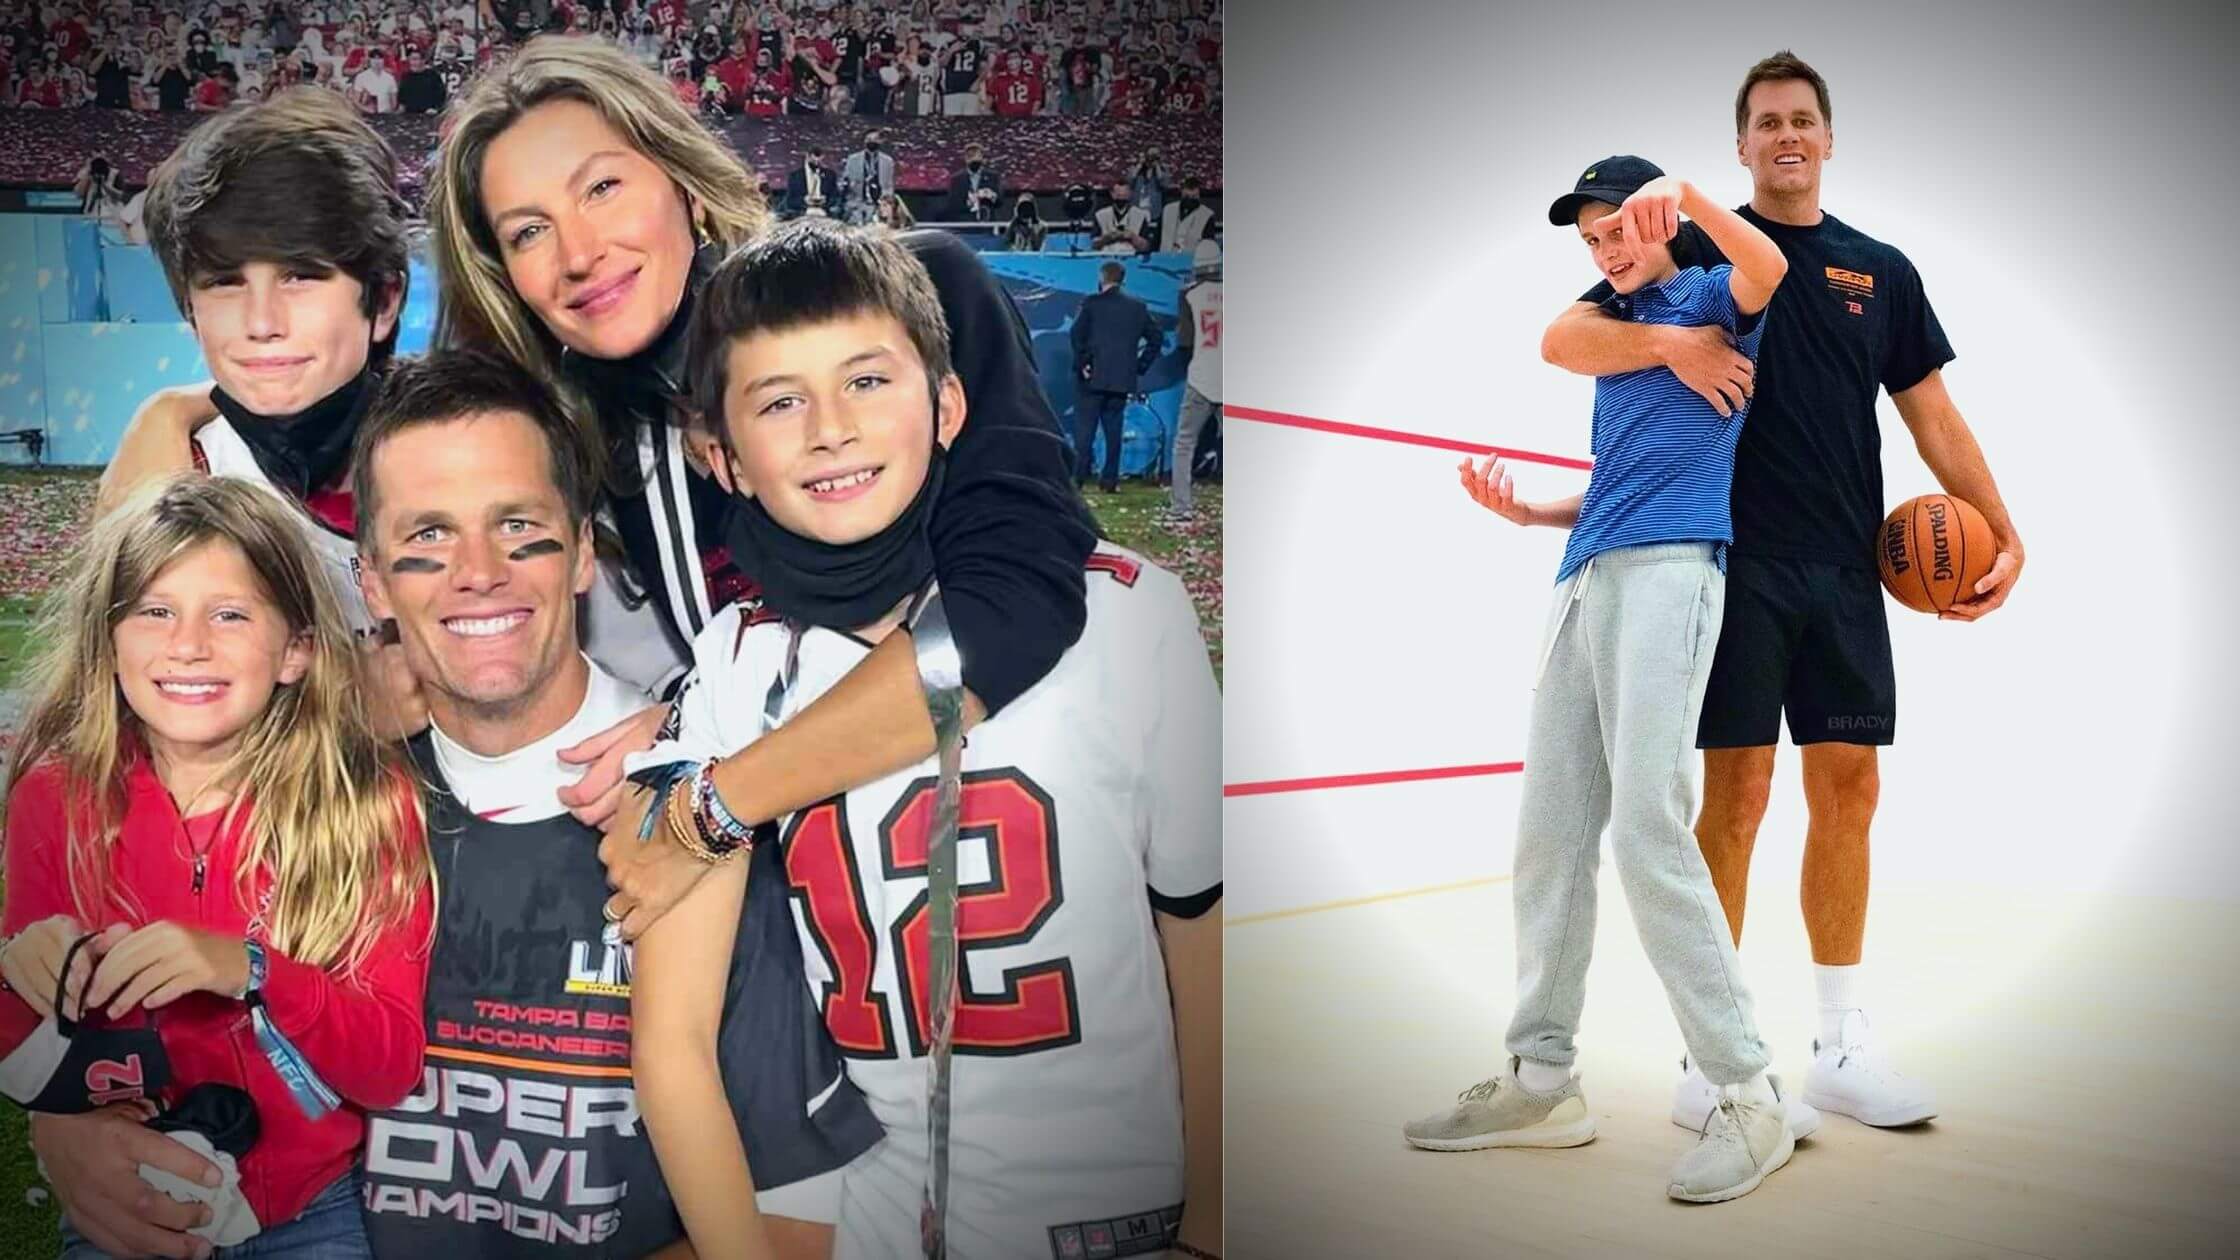 Gisele Bundchen Supports Tom Brady's Son Despite Divorce